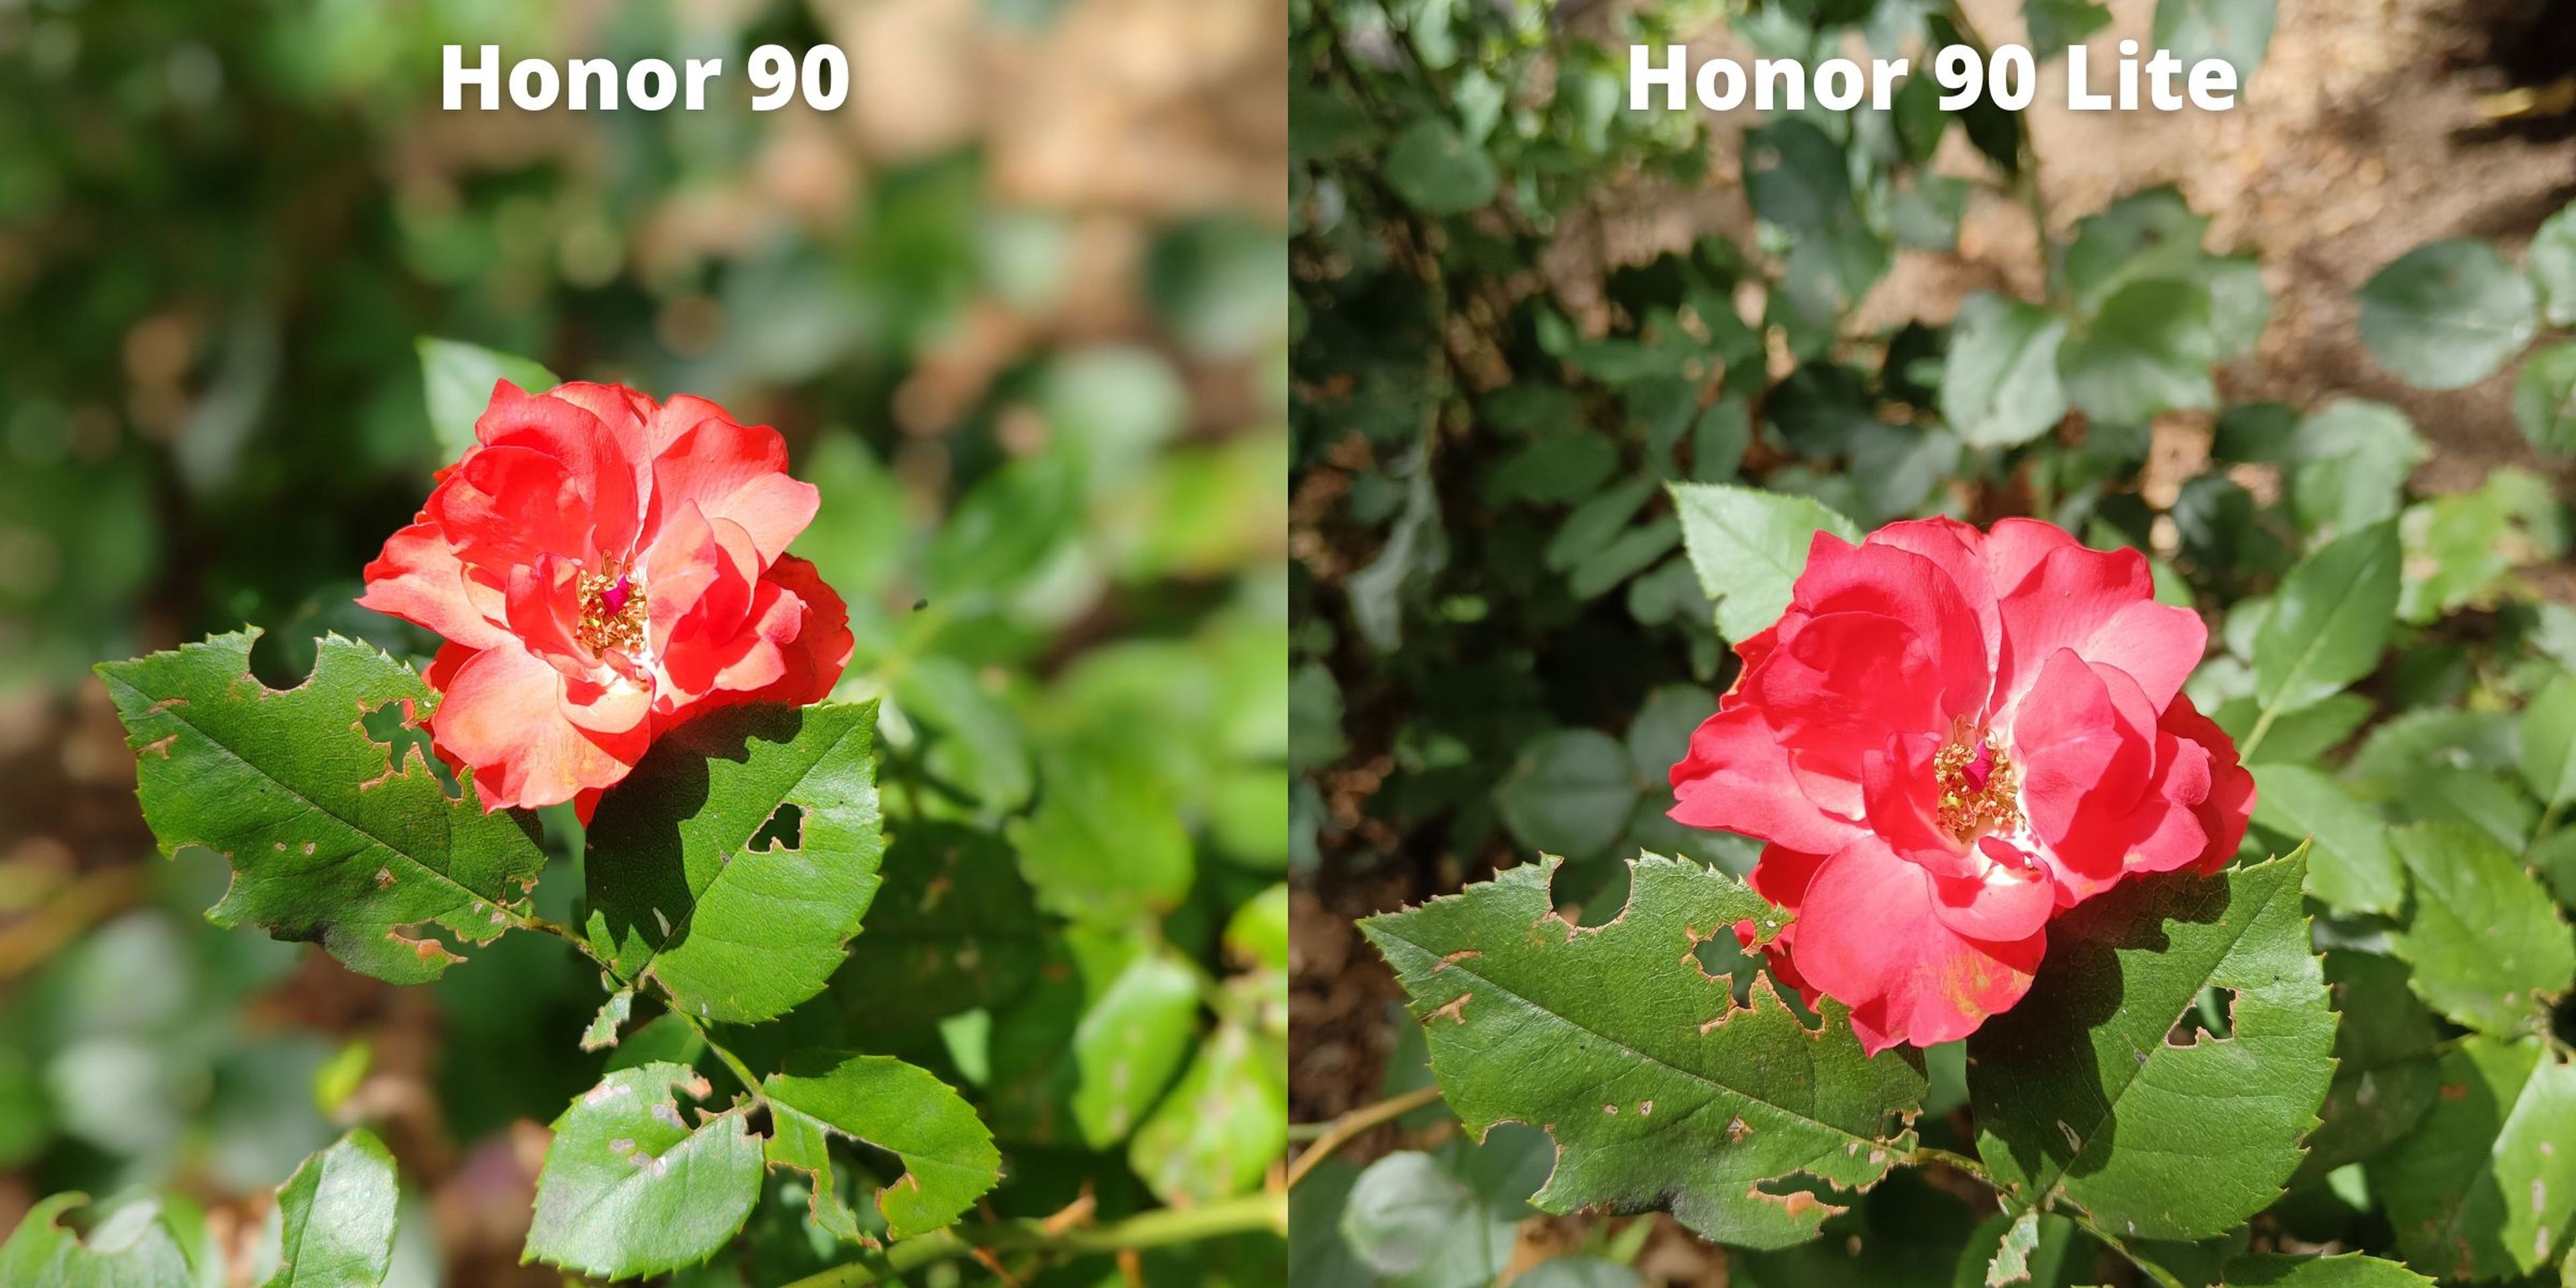 Honor 90 vs Honor 90 Lite